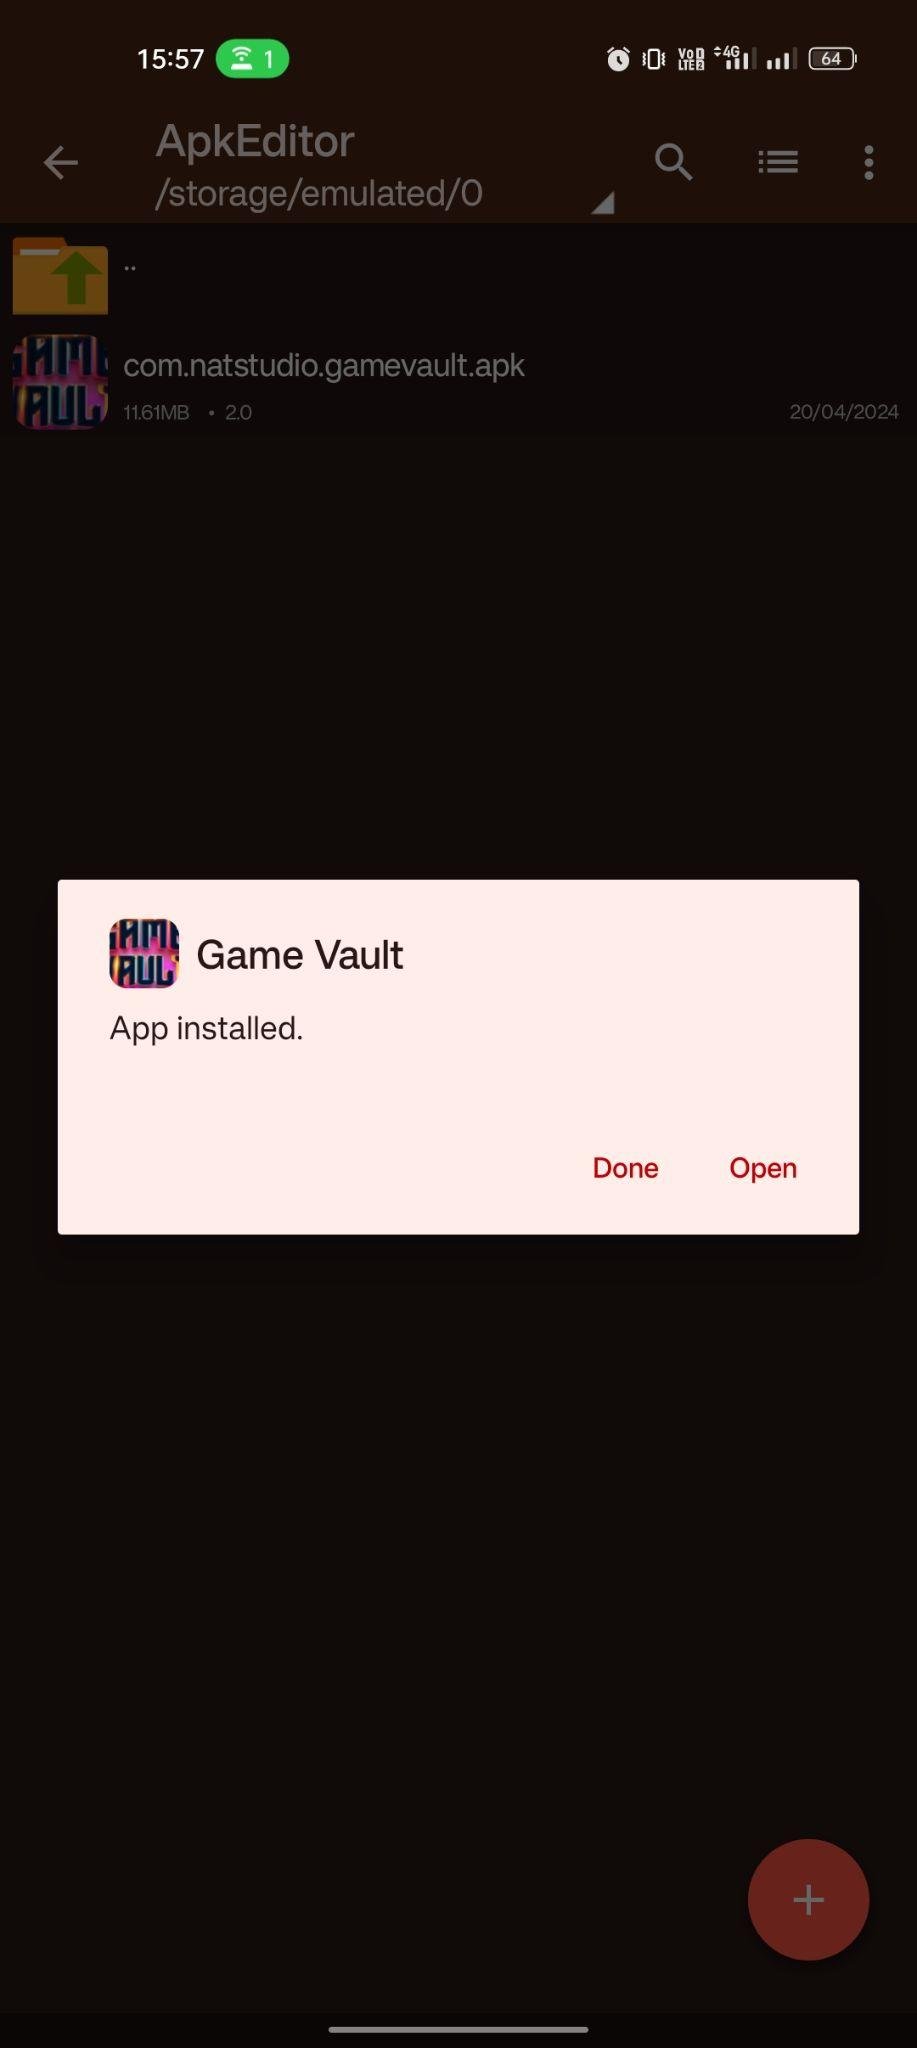 Game Vault apk installed